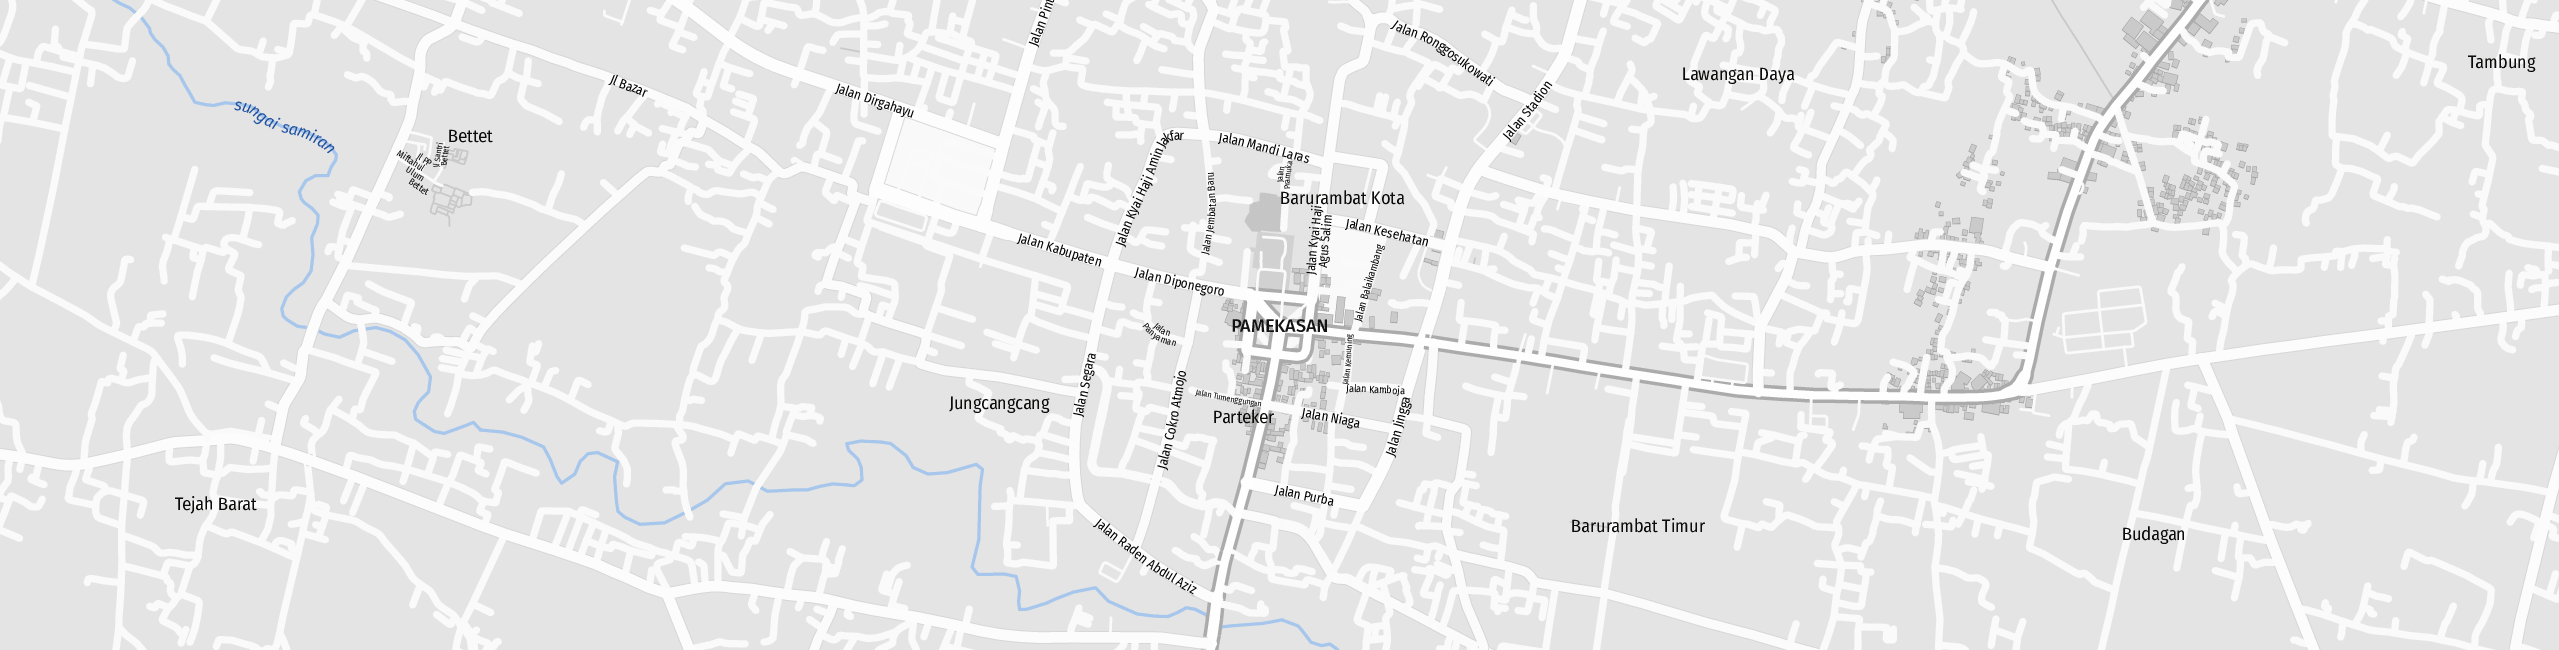 Stadtplan Pamekasan zum Downloaden.